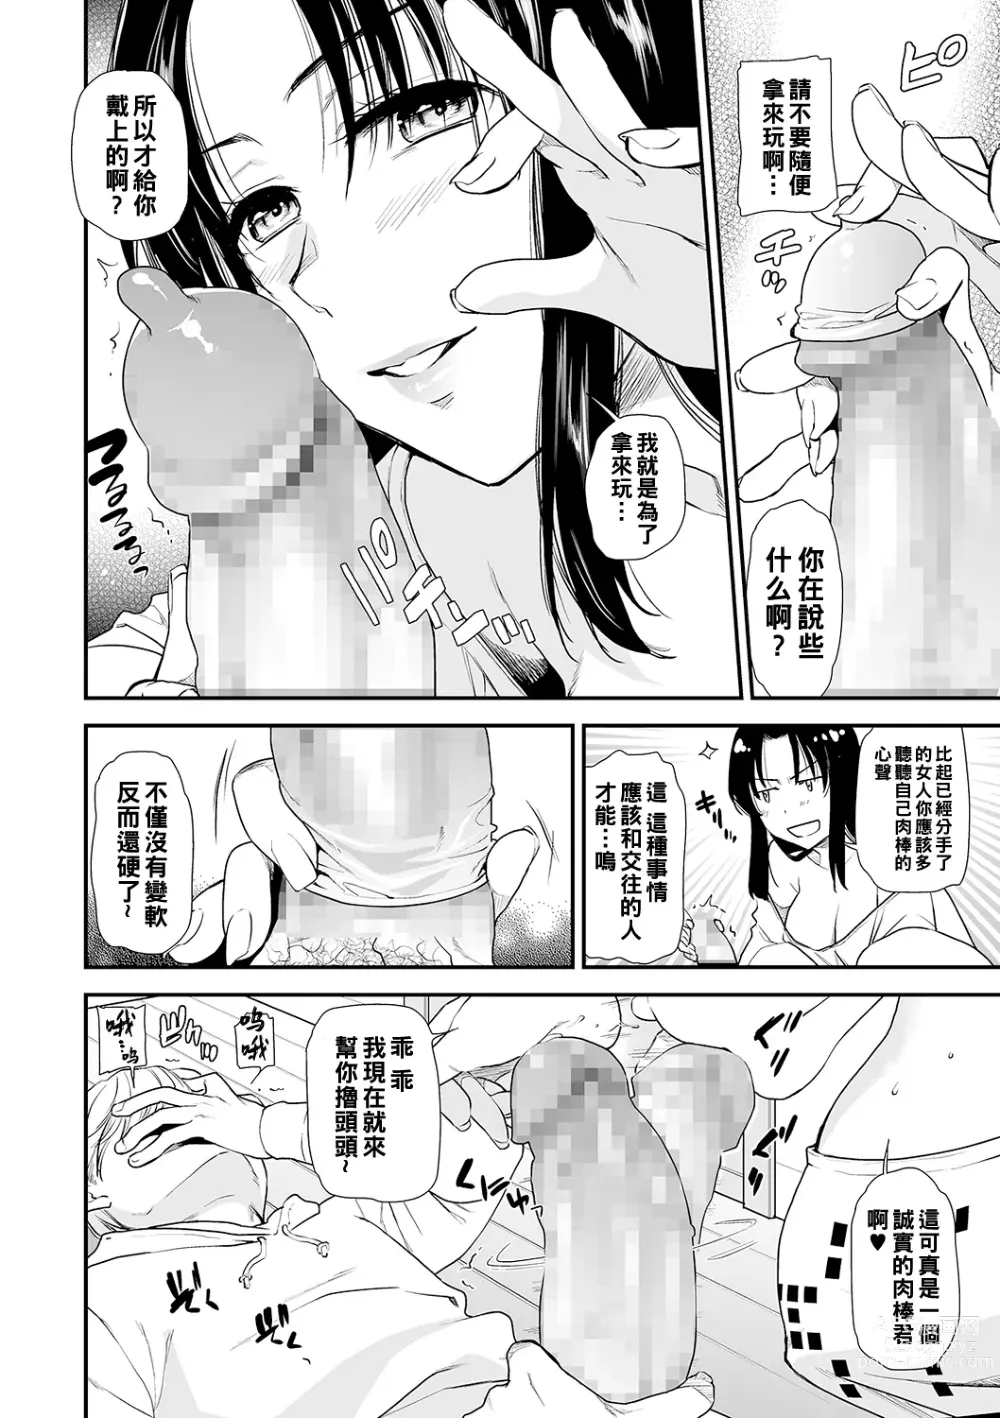 Page 4 of manga Eroi Ane no Sonzai